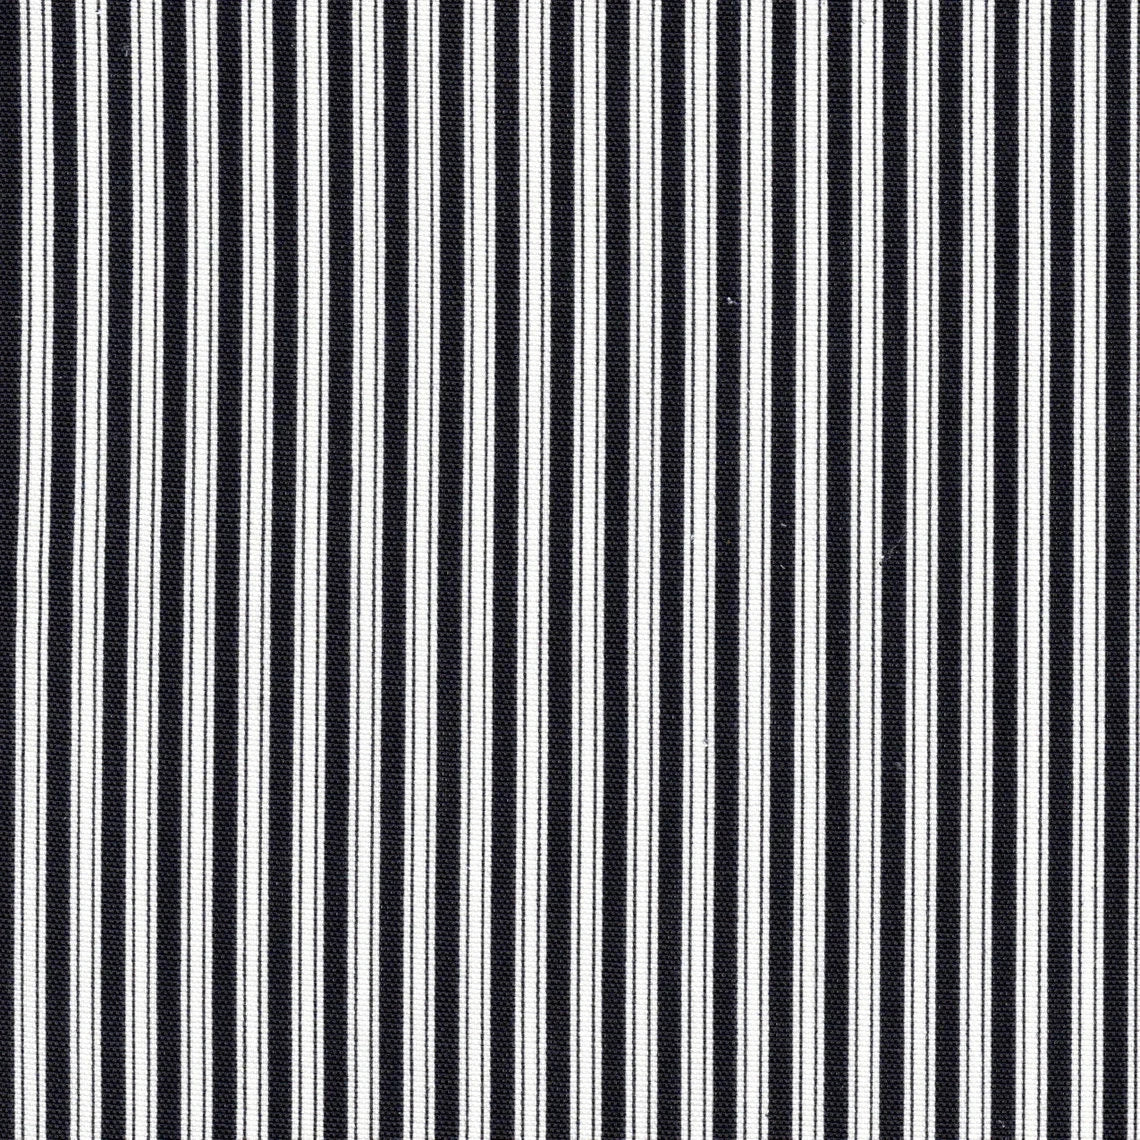 gathered bedskirt in polo onyx black stripe on white